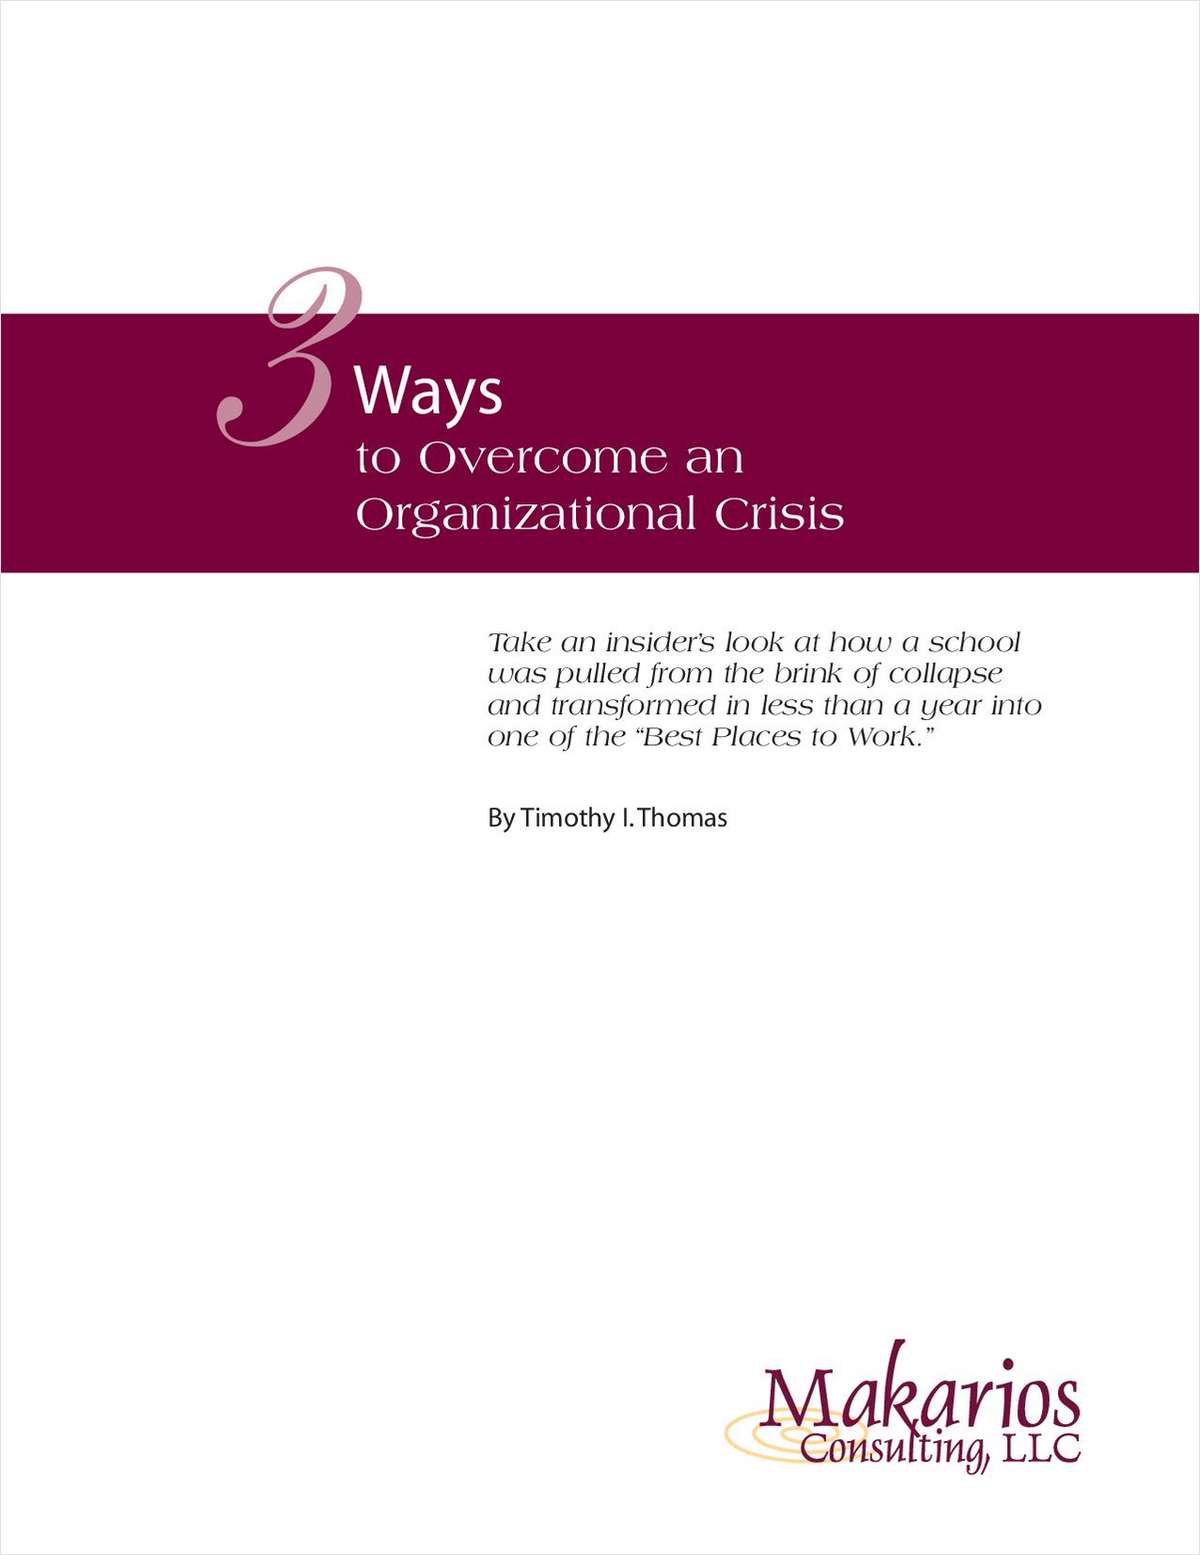 3 Ways to Overcome an Organizational Crisis